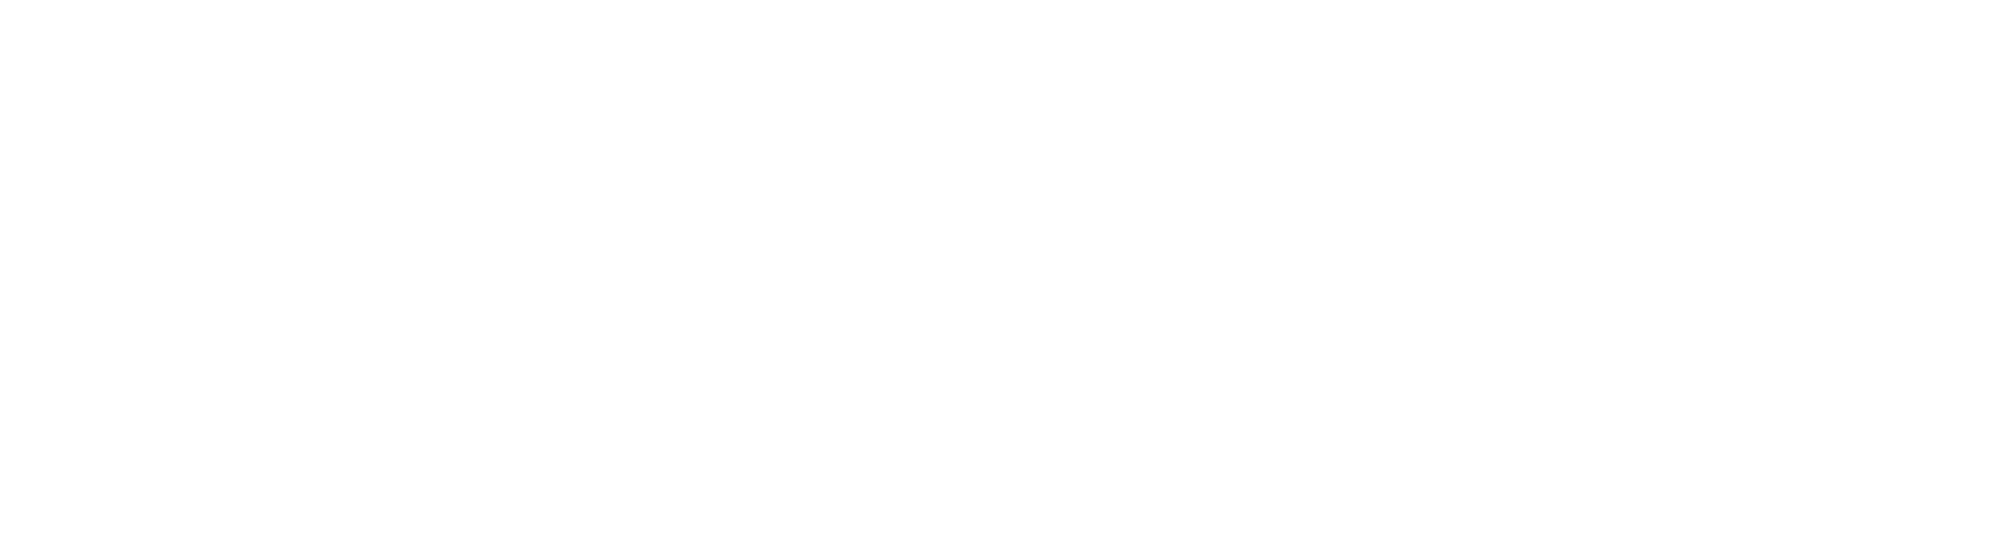 Claranet AWS